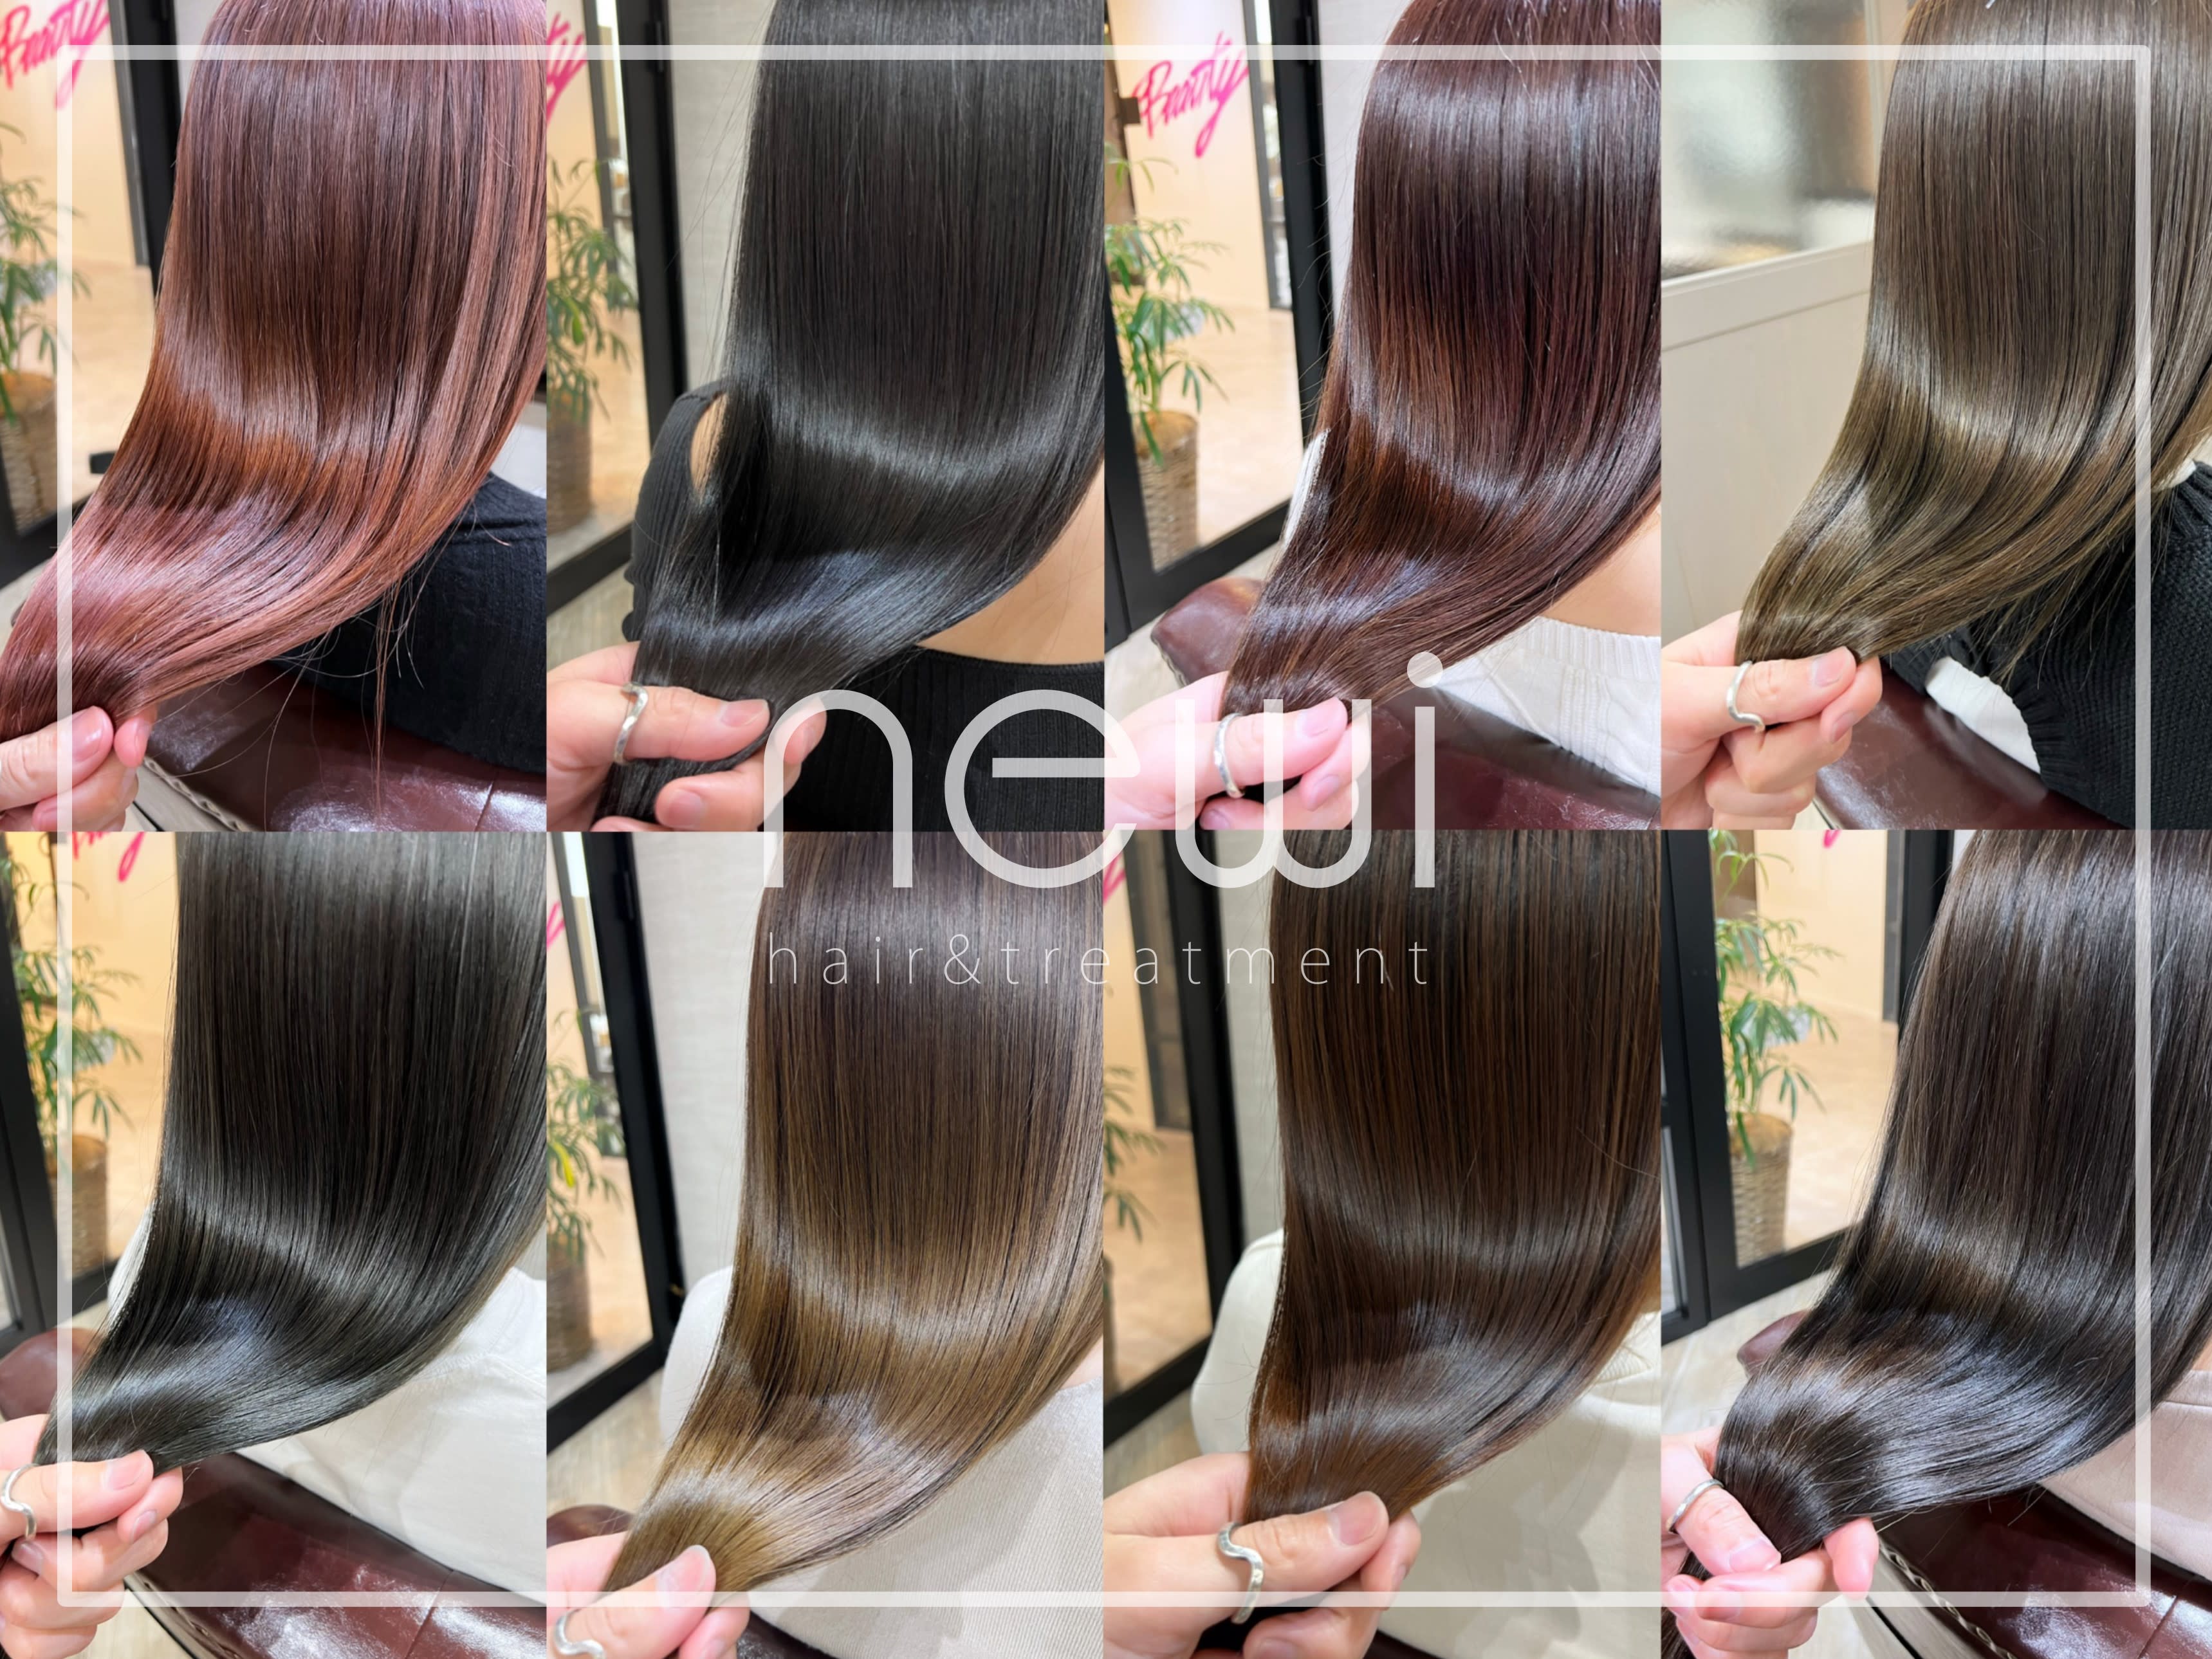 newi hair&treatment大分中央町店のアイキャッチ画像